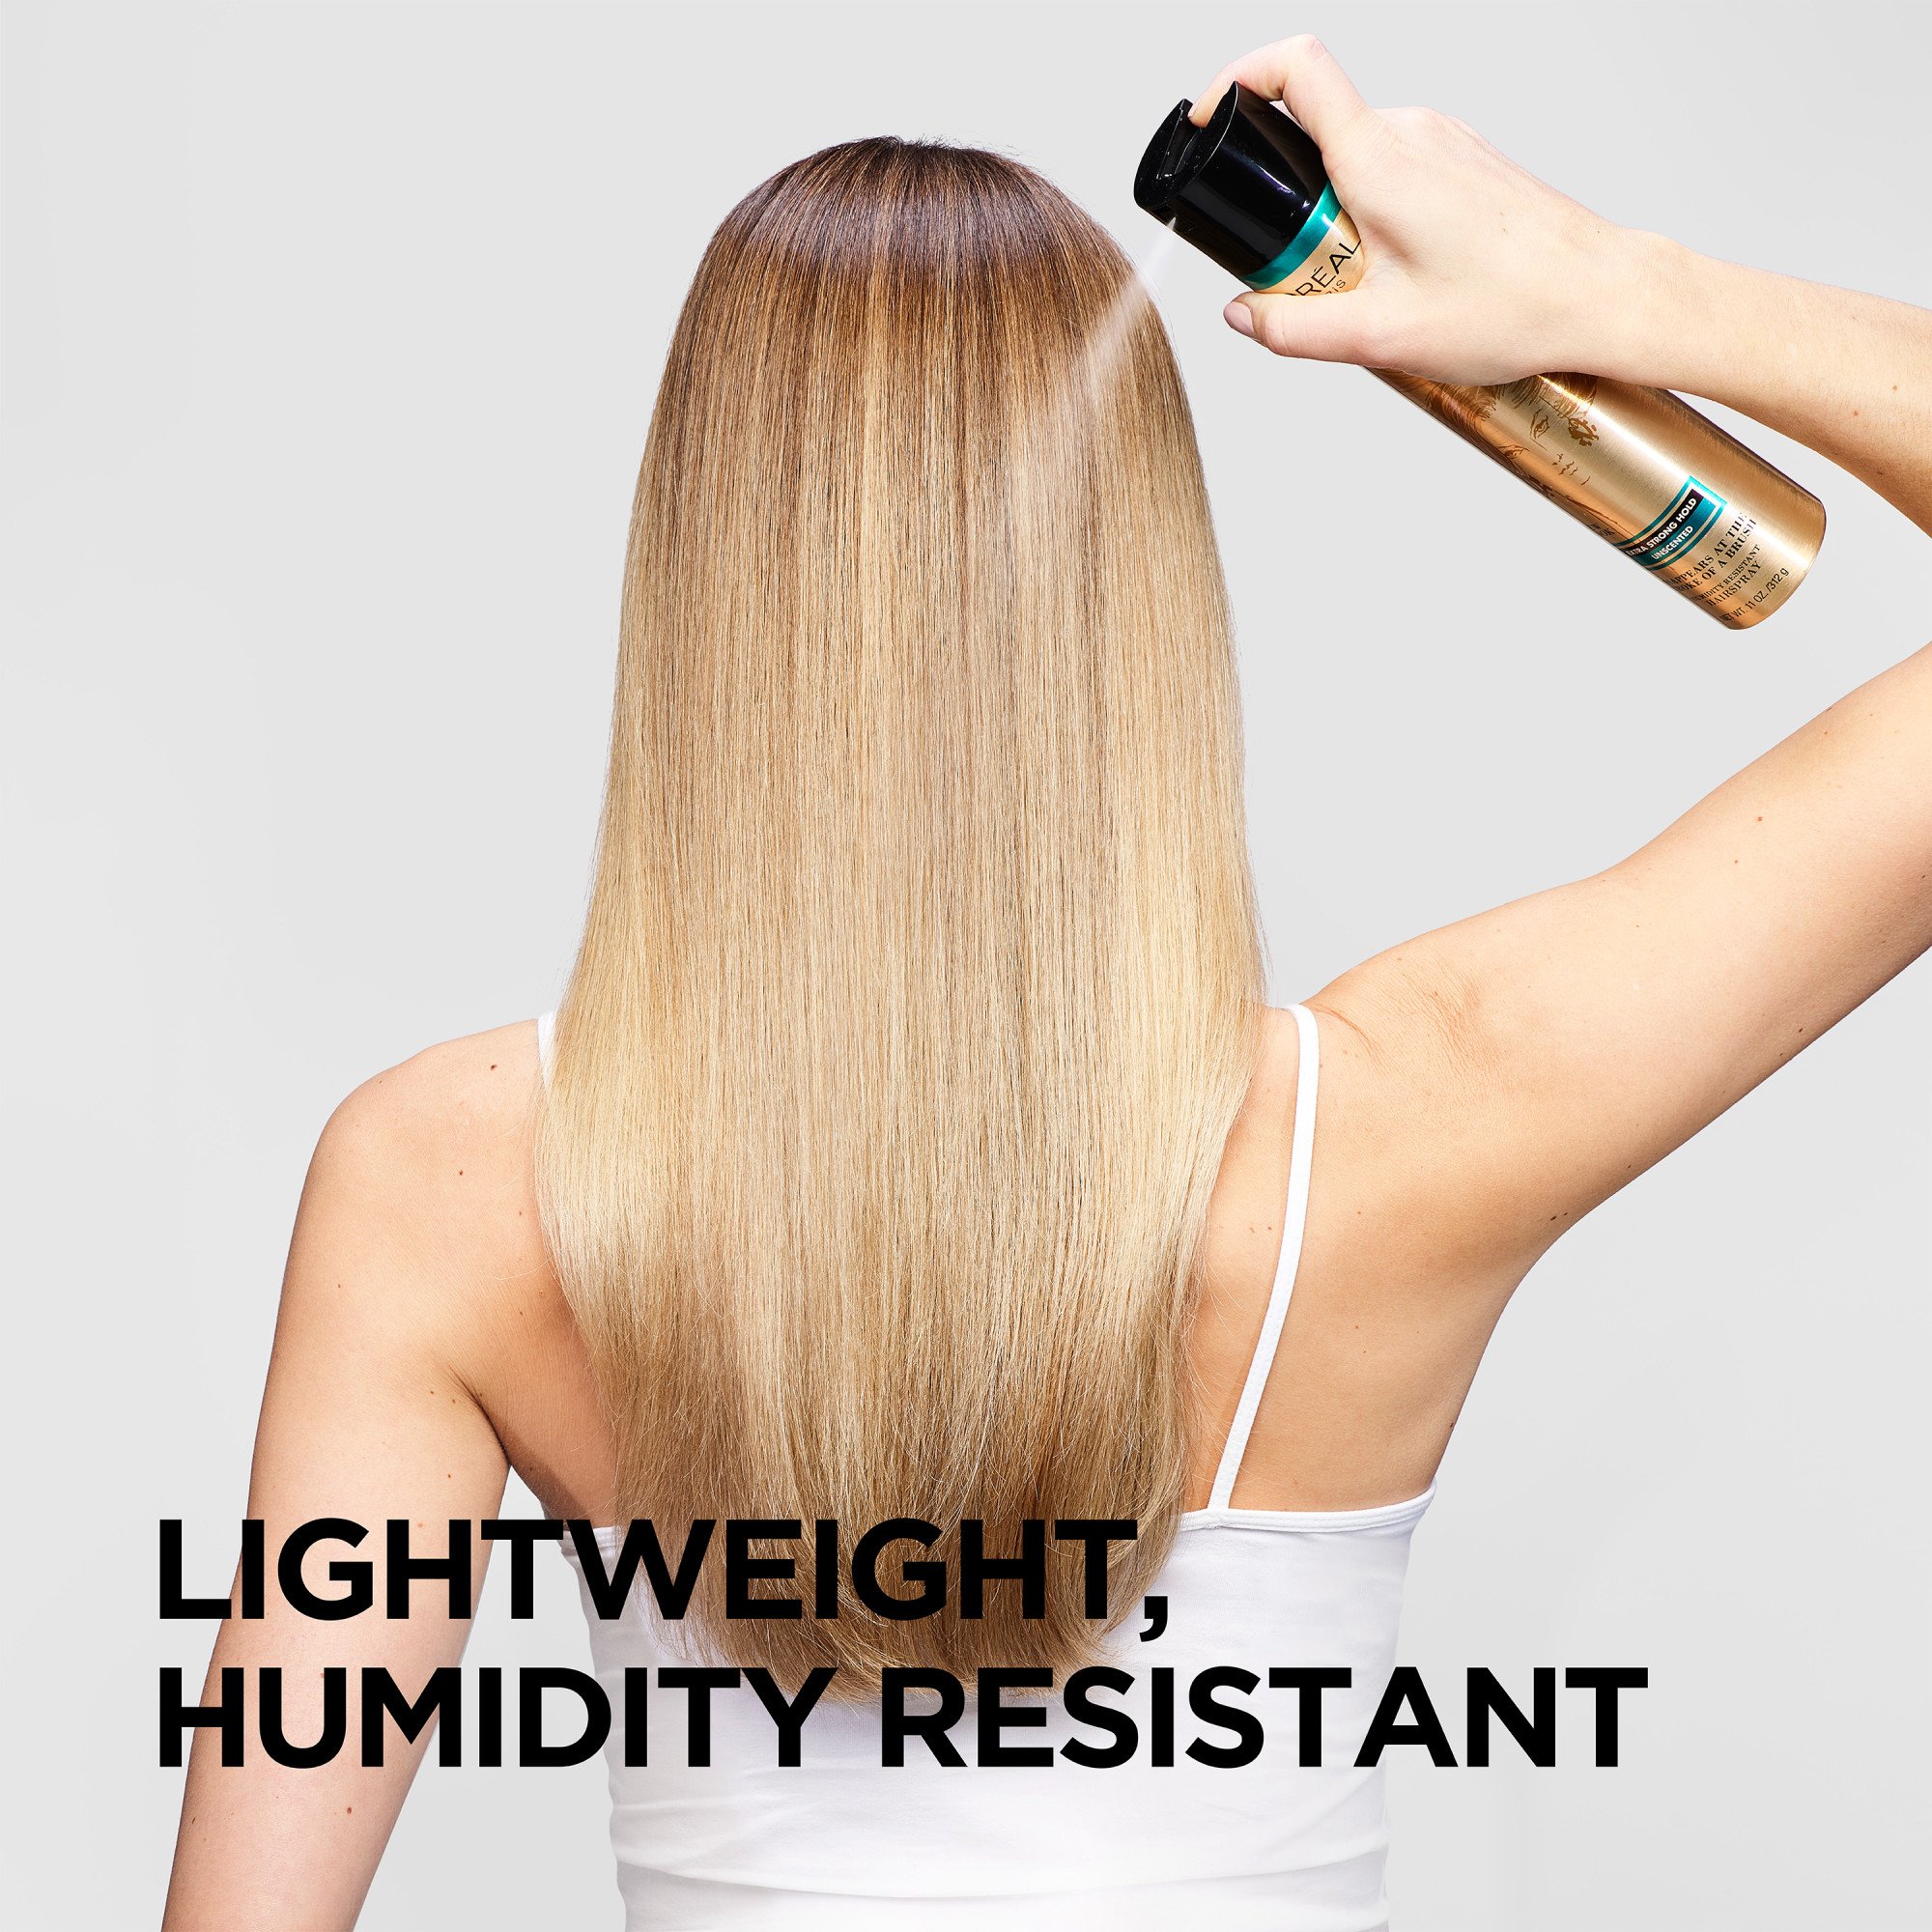 L'Oréal Paris Elnett Satin Extra Strong Hold Hairspray - Volume, 11 oz.  Ingredients and Reviews